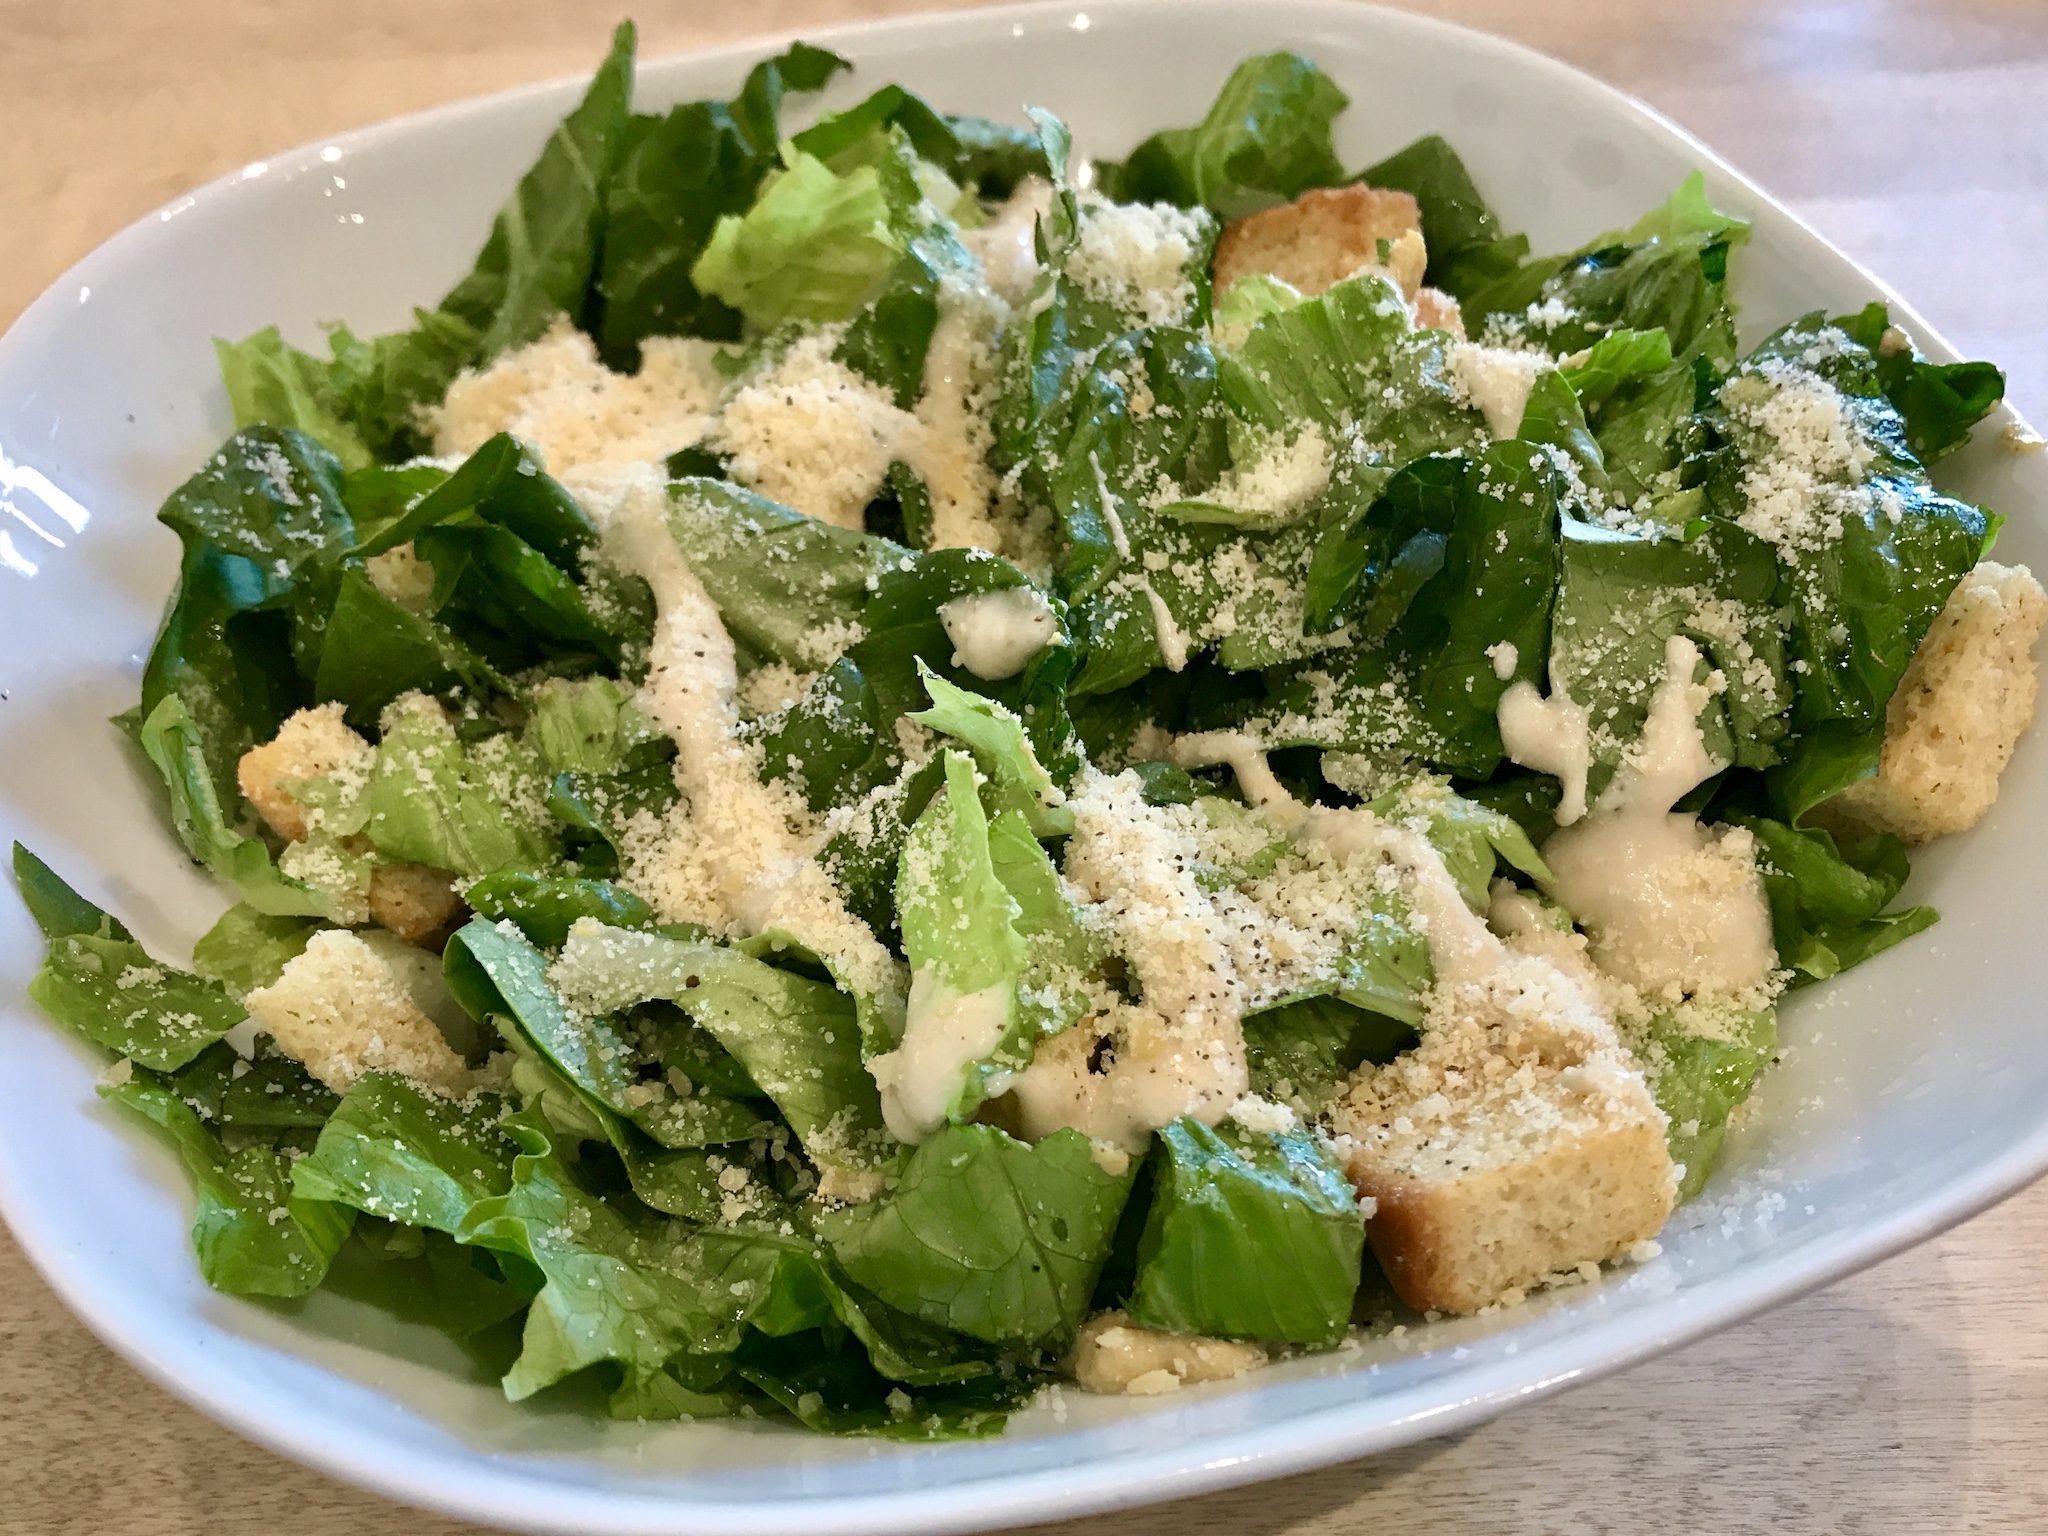 Mio's Grill & Cafe Caesar Salad